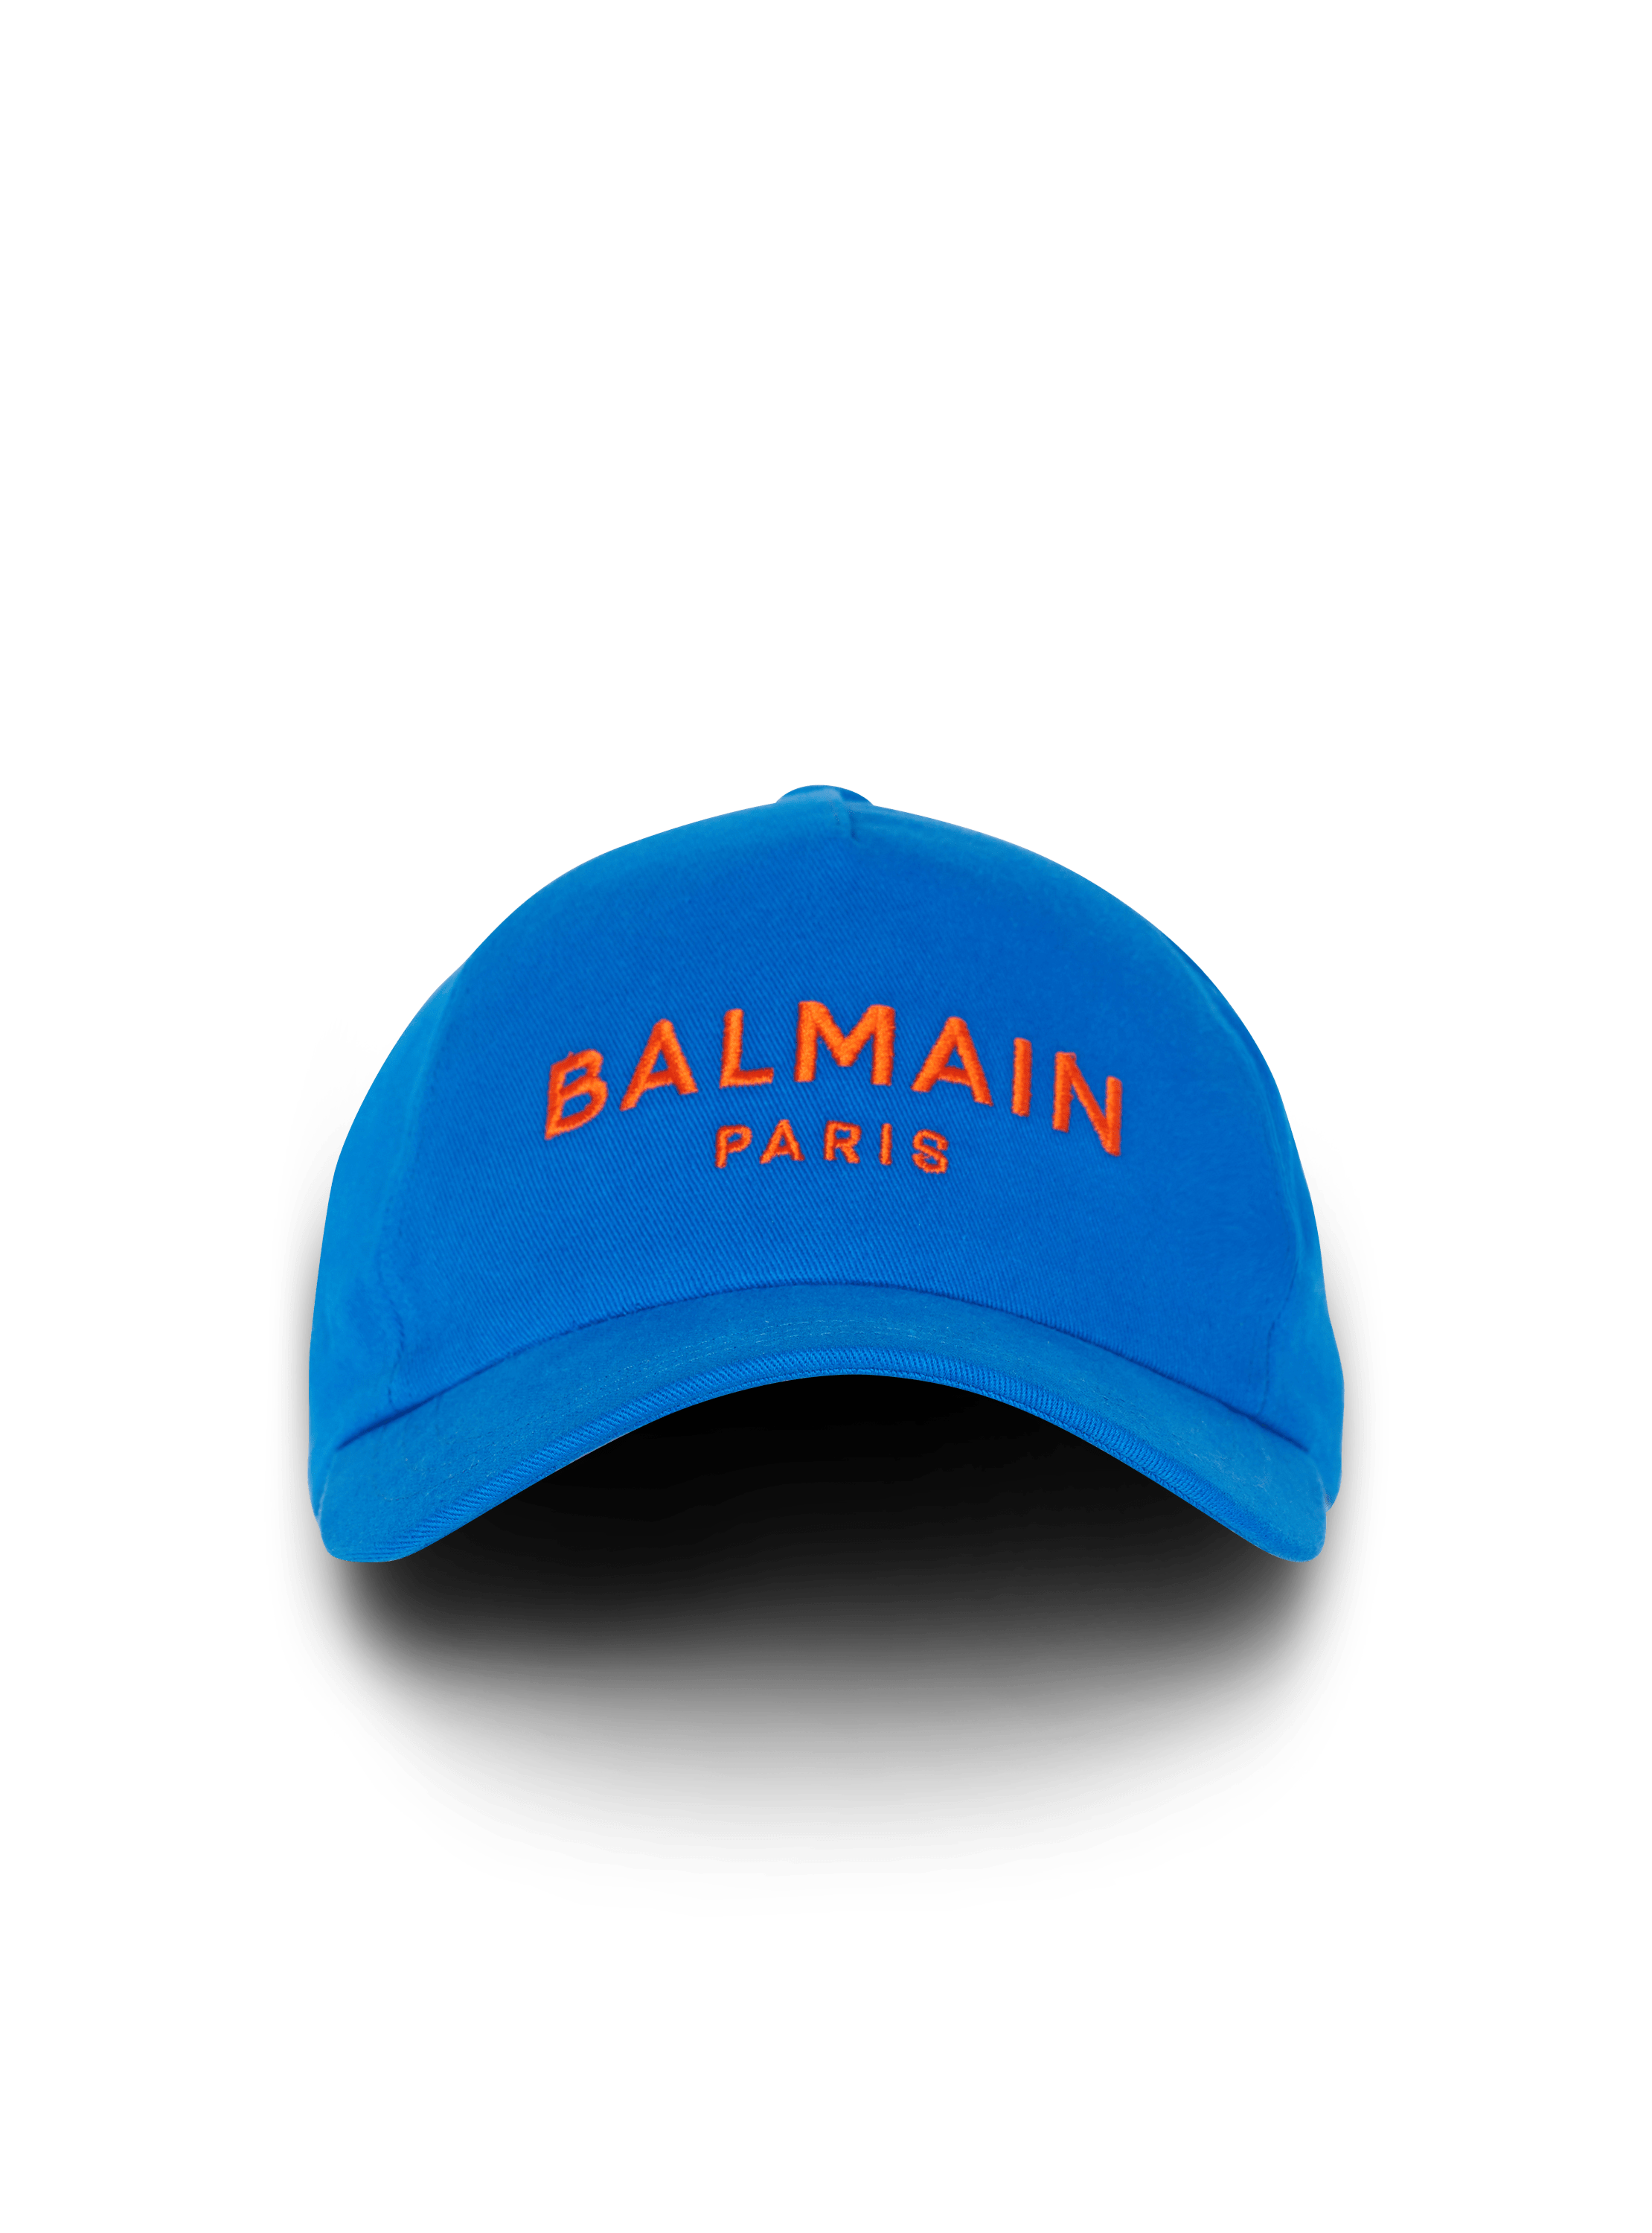 Embroidered Balmain Paris cap navy - Men | BALMAIN